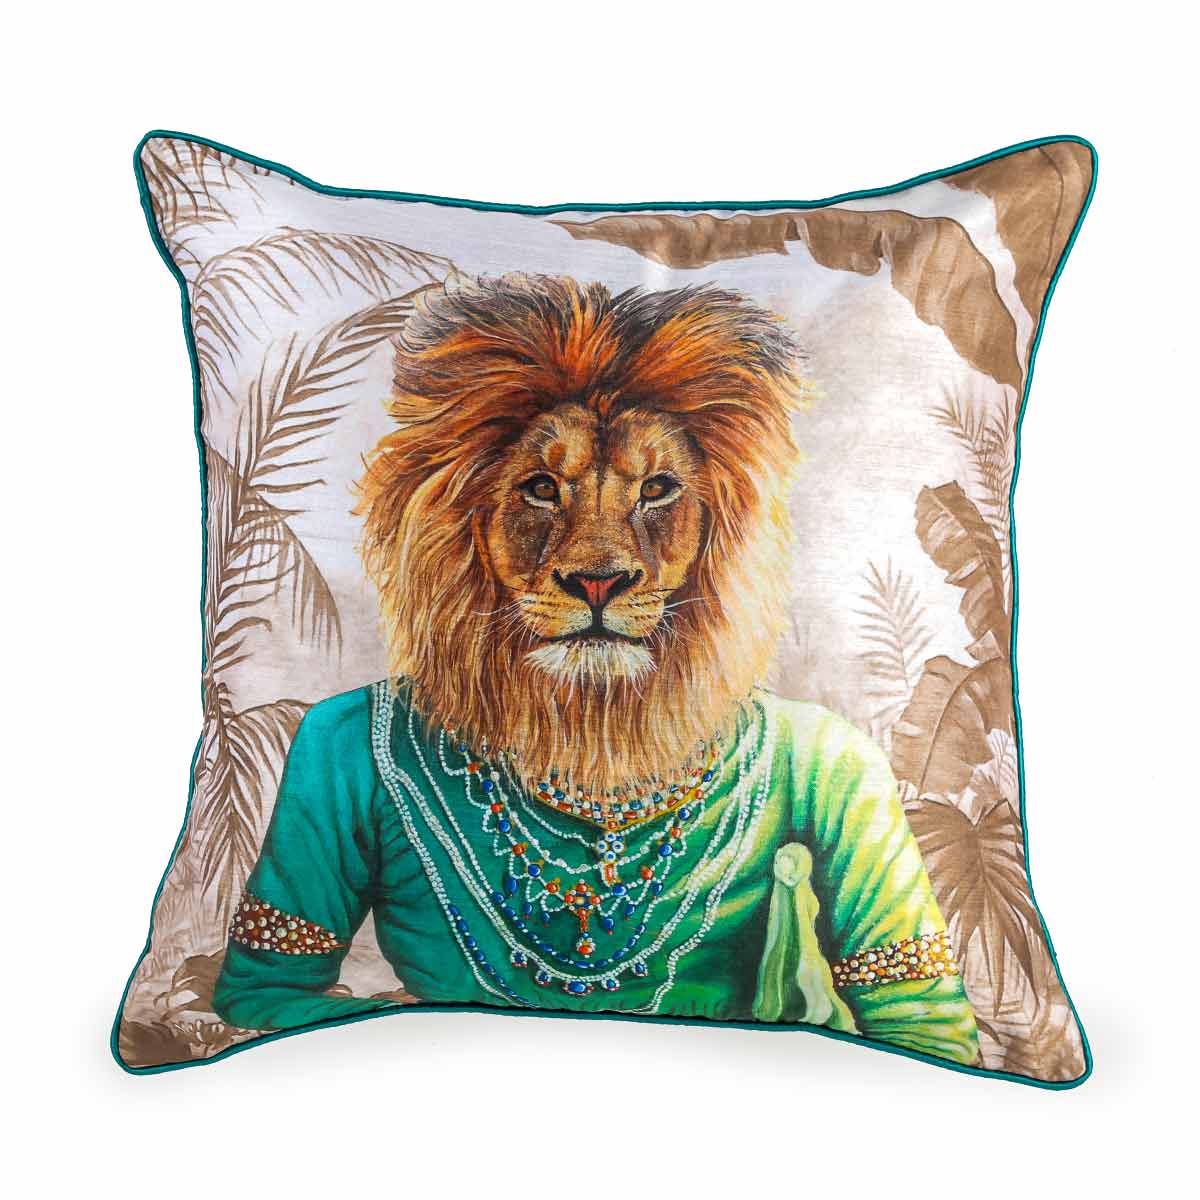 Quirky Kingdom Lion Cushion Cover 18 x 18 Inch